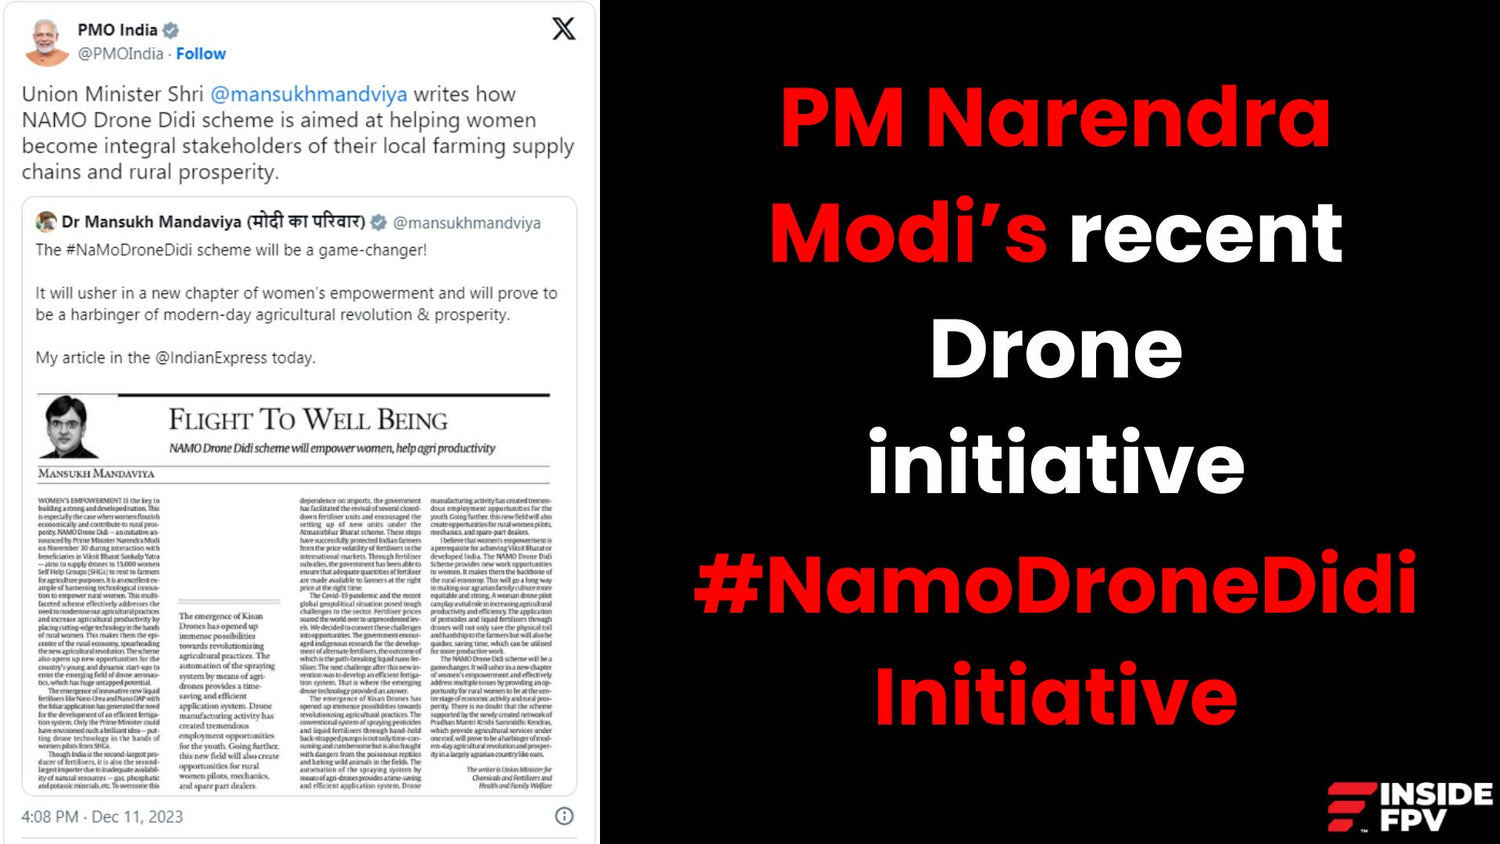 insideFPV Flies High with PM Modi's #NamoDrone Didi Initiative